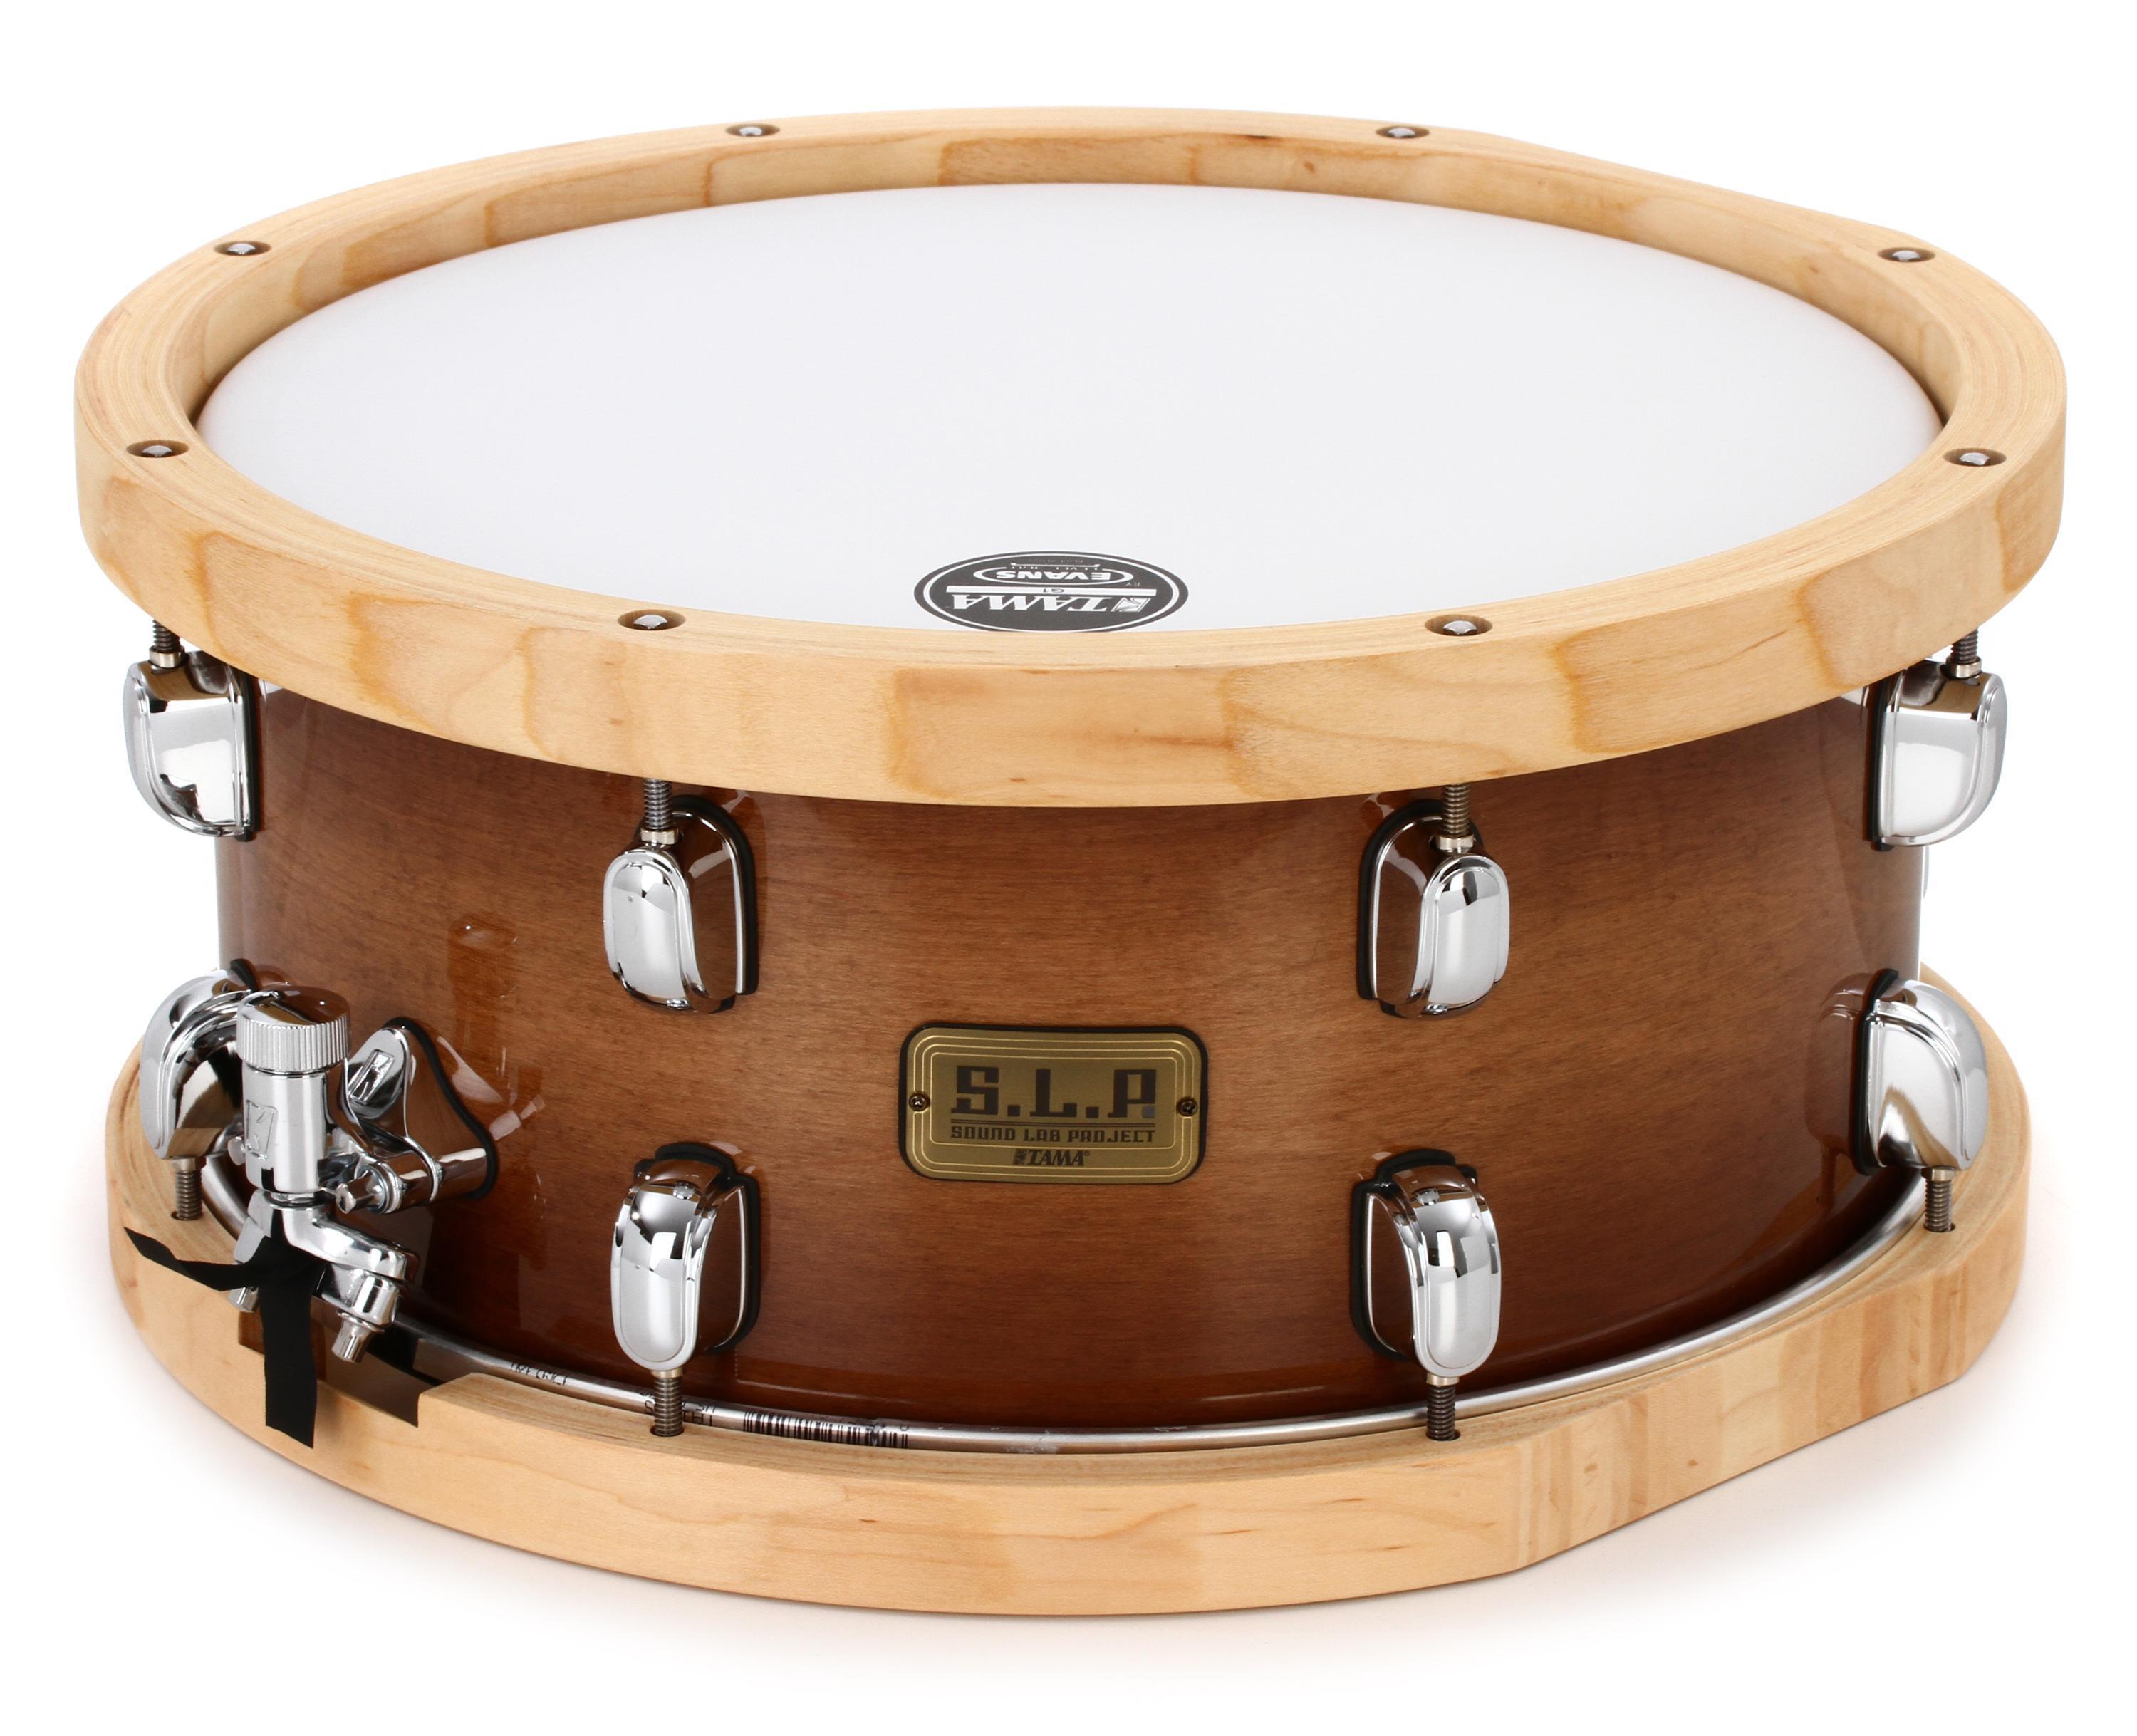 Tama S.L.P. Studio Maple Snare Drum - 6.5 x 14 inch - Sienna